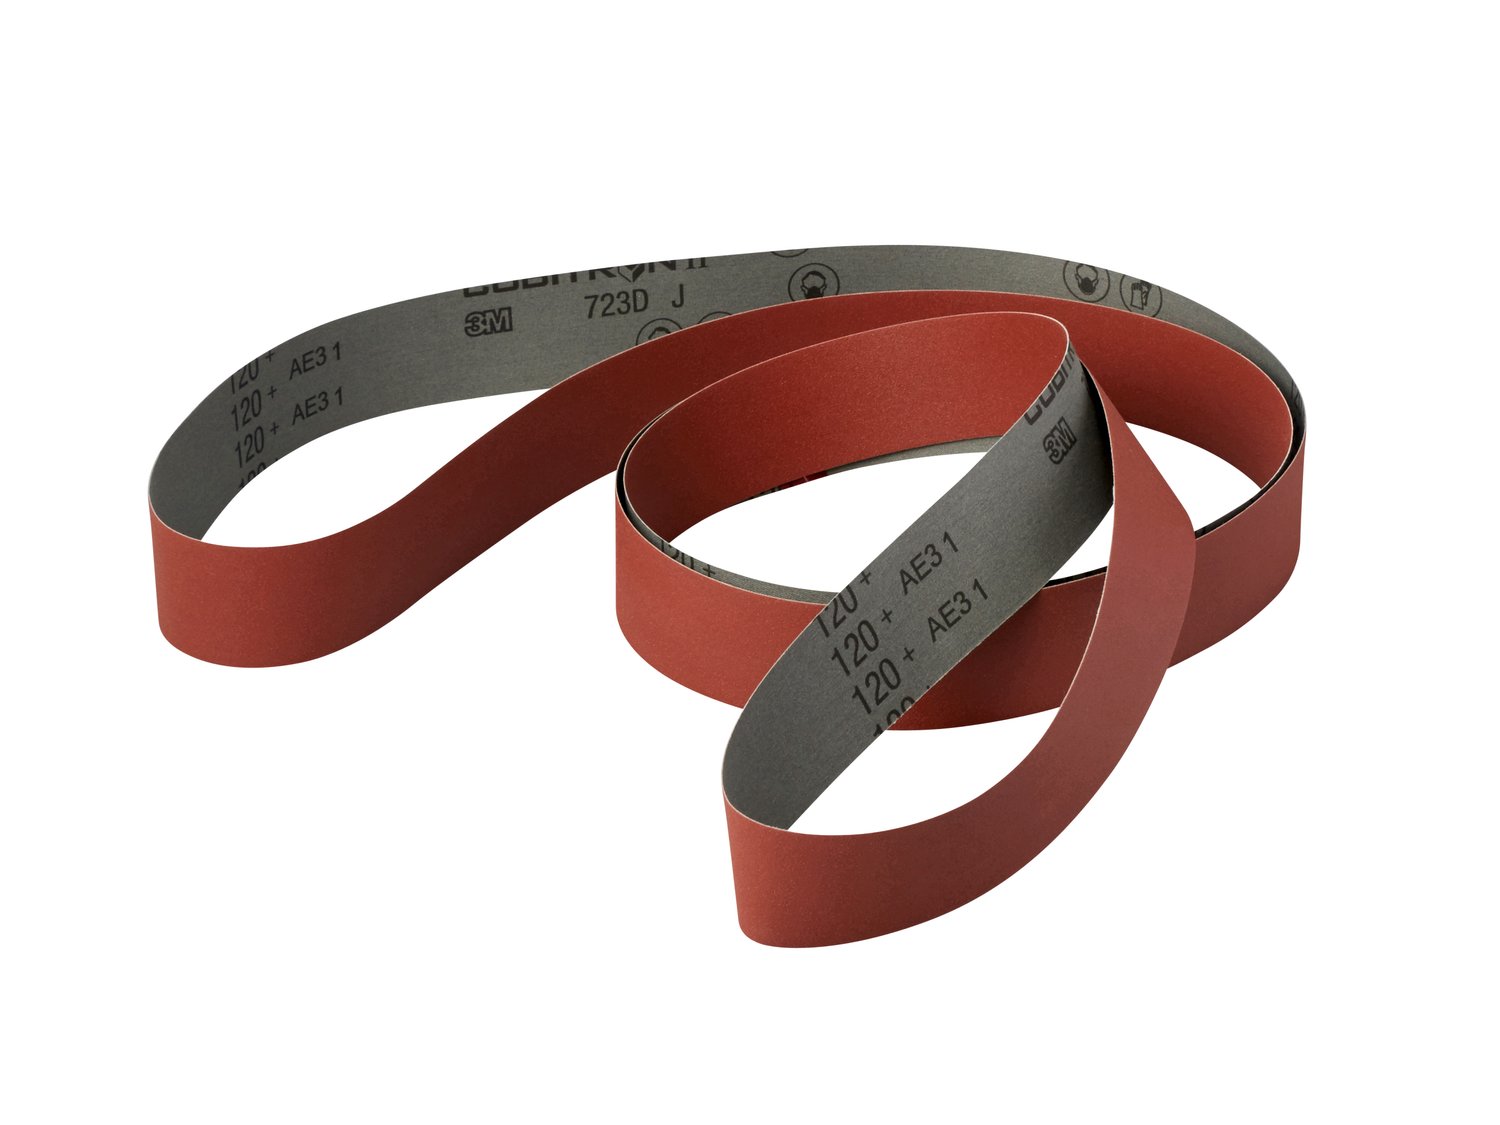 7010514101 - 3M Cubitron ll Cloth Belt 723D, 150+ J-weight, 3 in x 148 in,
Film-lok, Full-flex